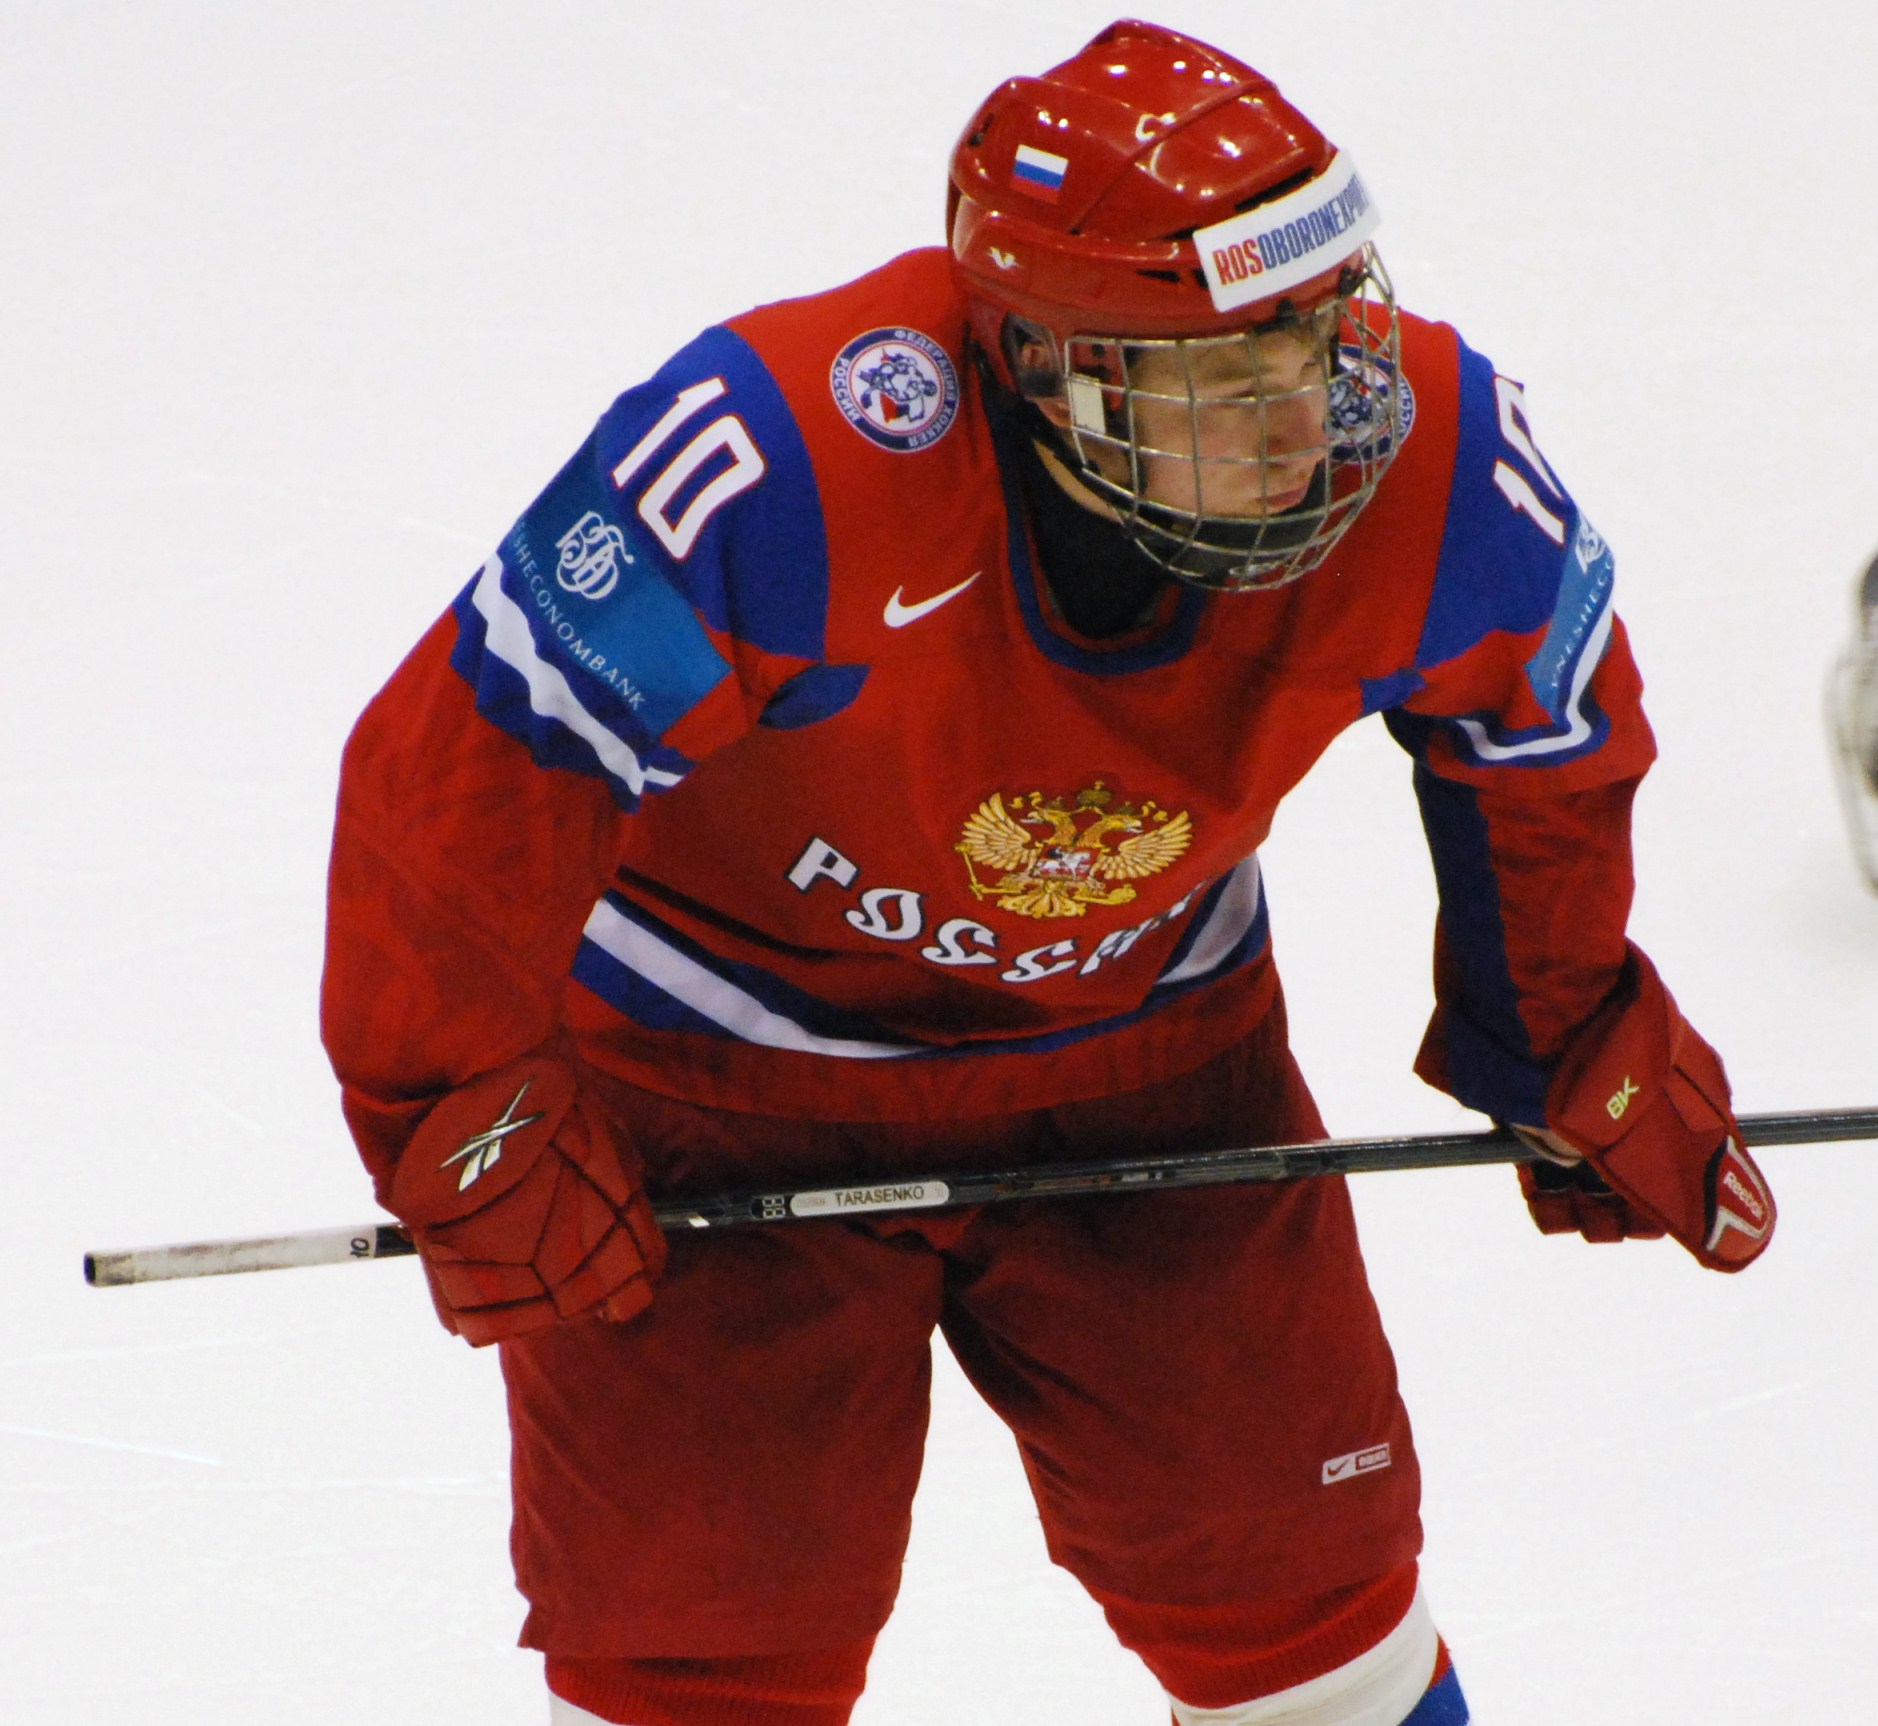 Vladimir Tarasenko Russian professional ice hockey right winger T-Shirt -  Teefefe Premium ™ LLC